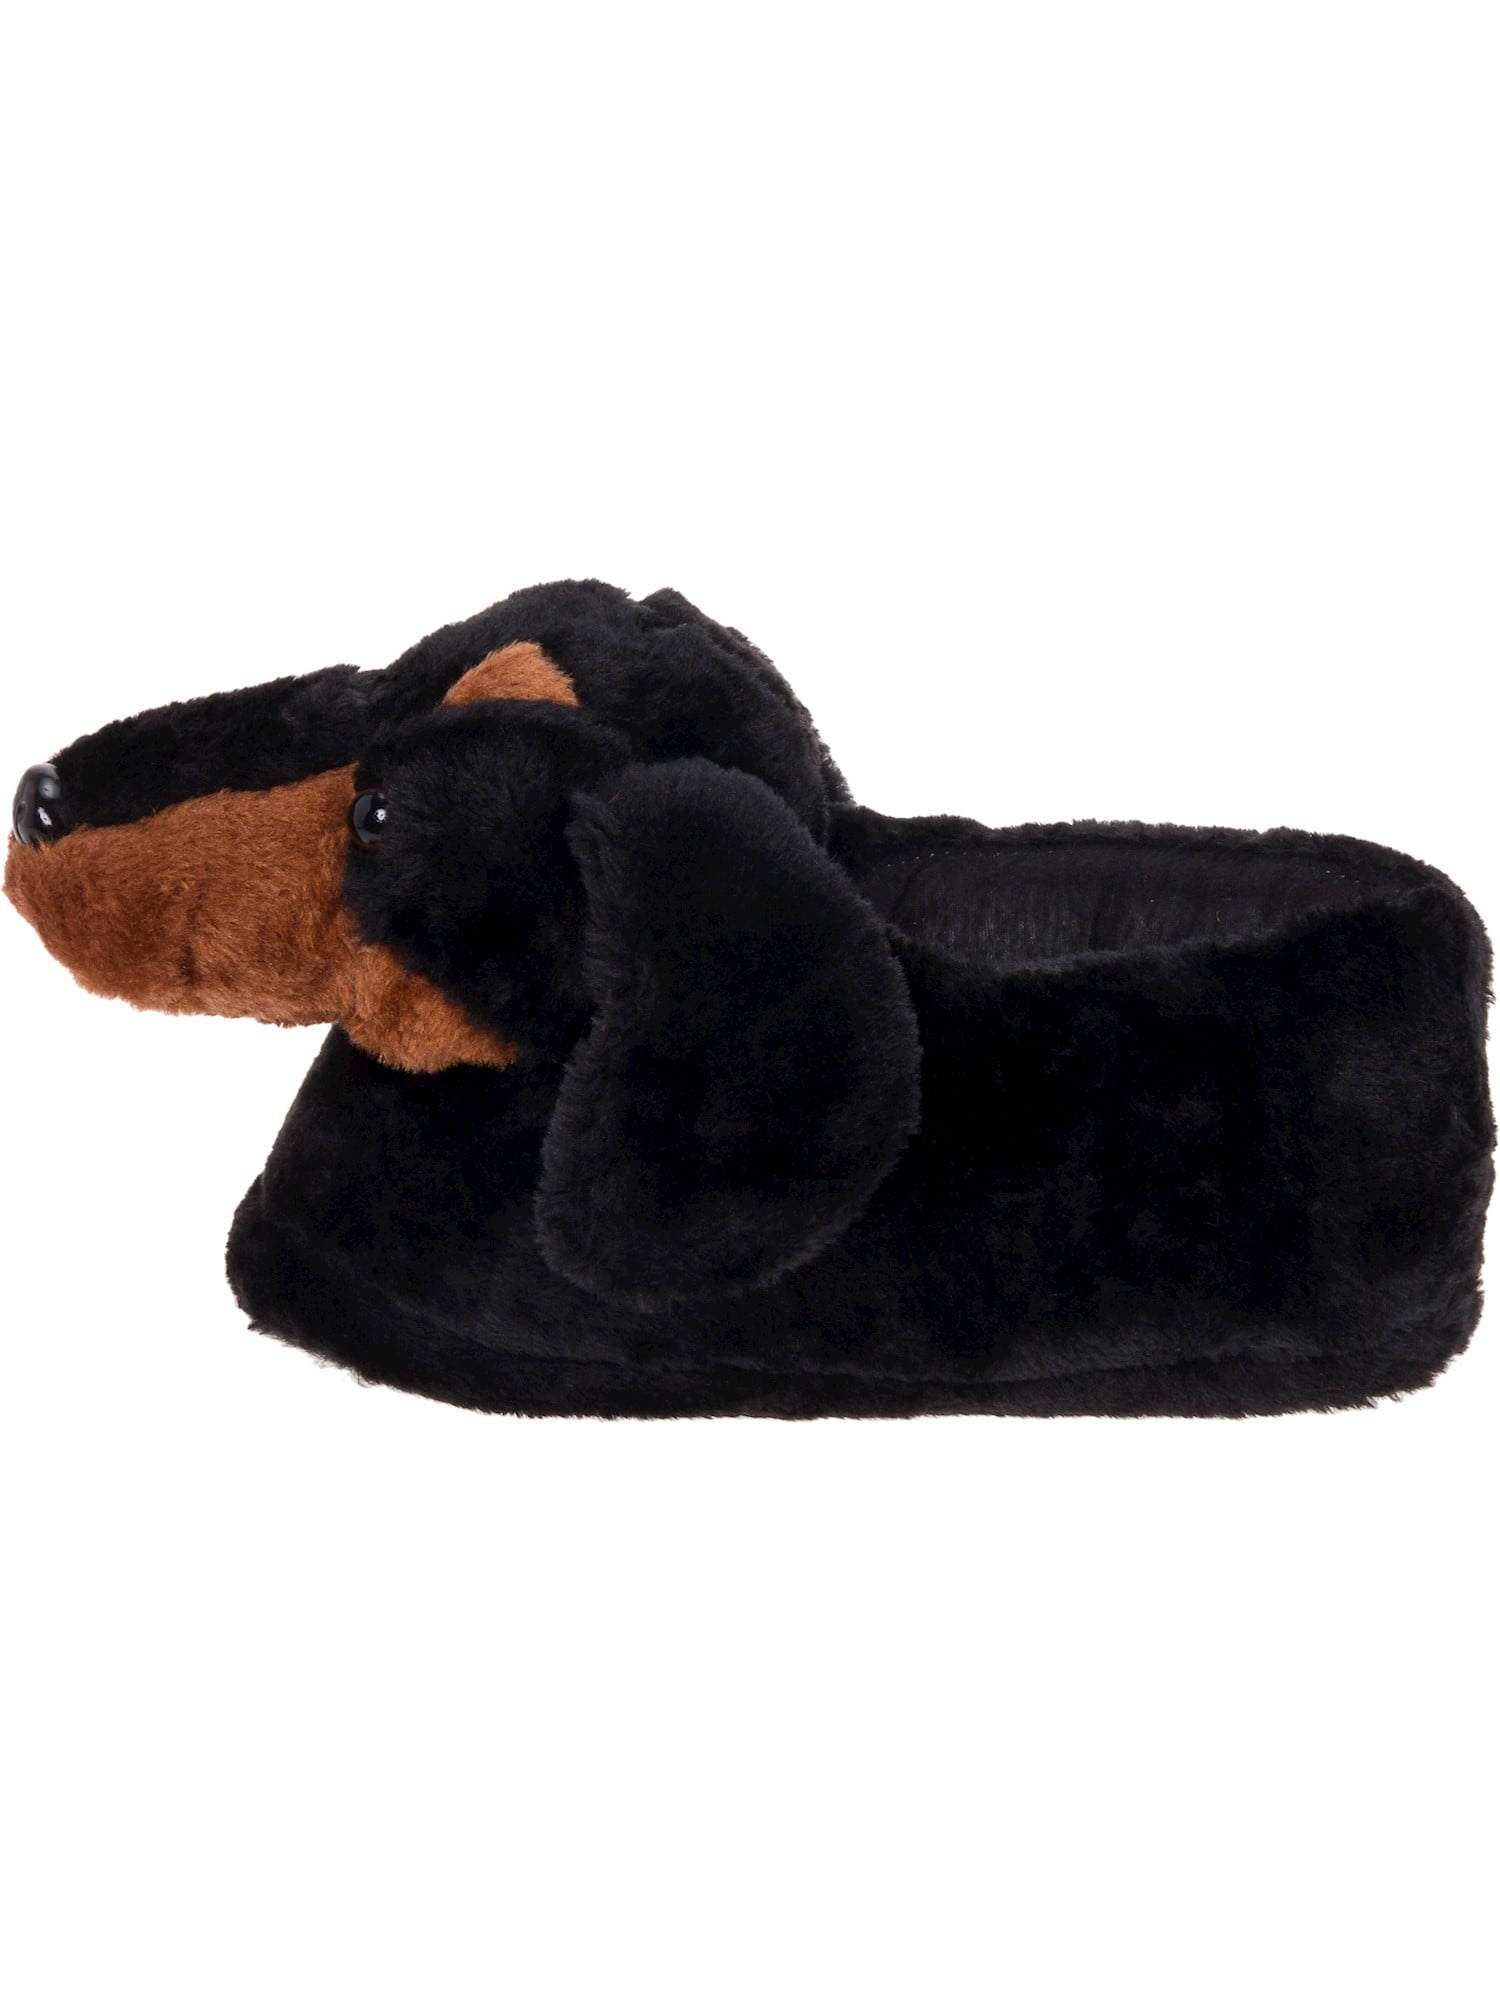 dachshund slippers walmart